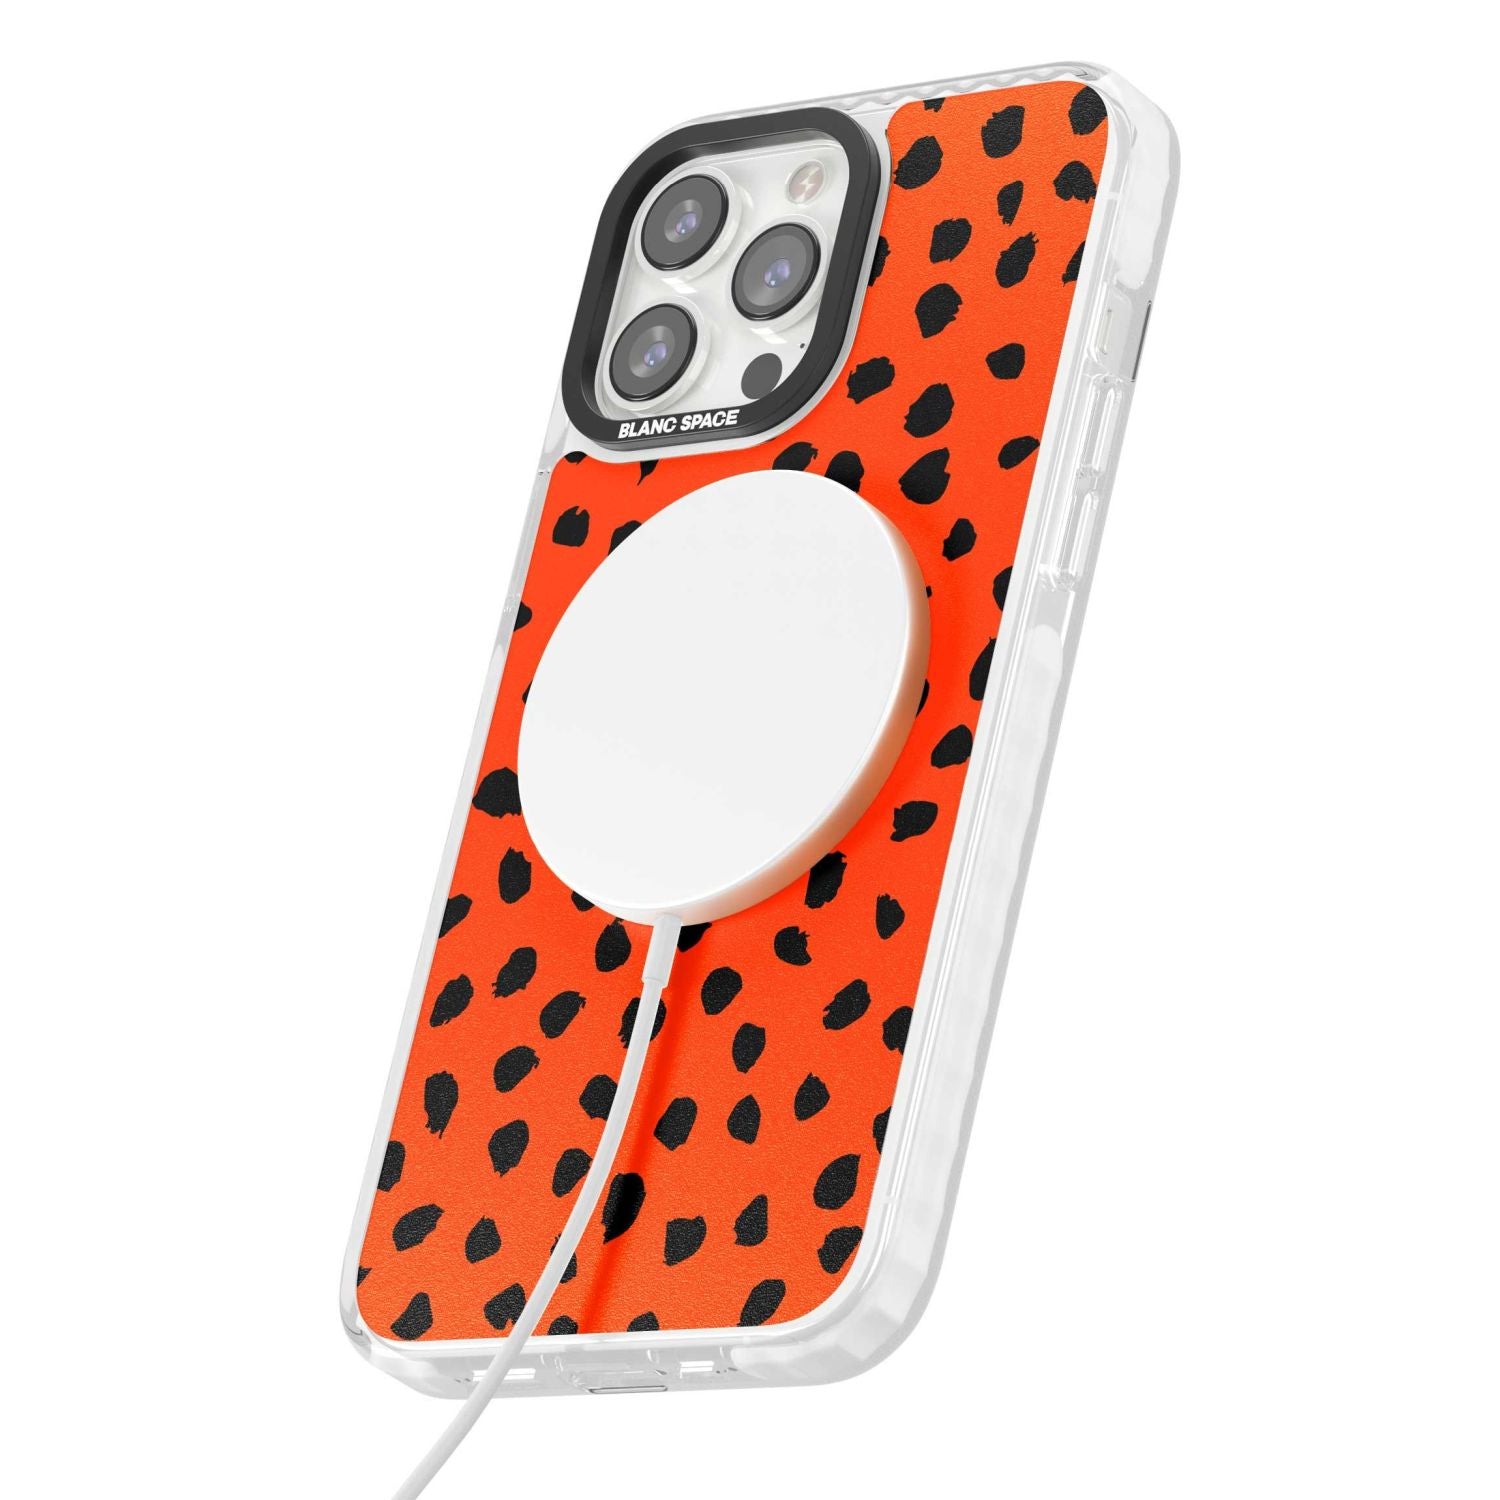 Black & Bright Red Dalmatian Polka Dot Spots